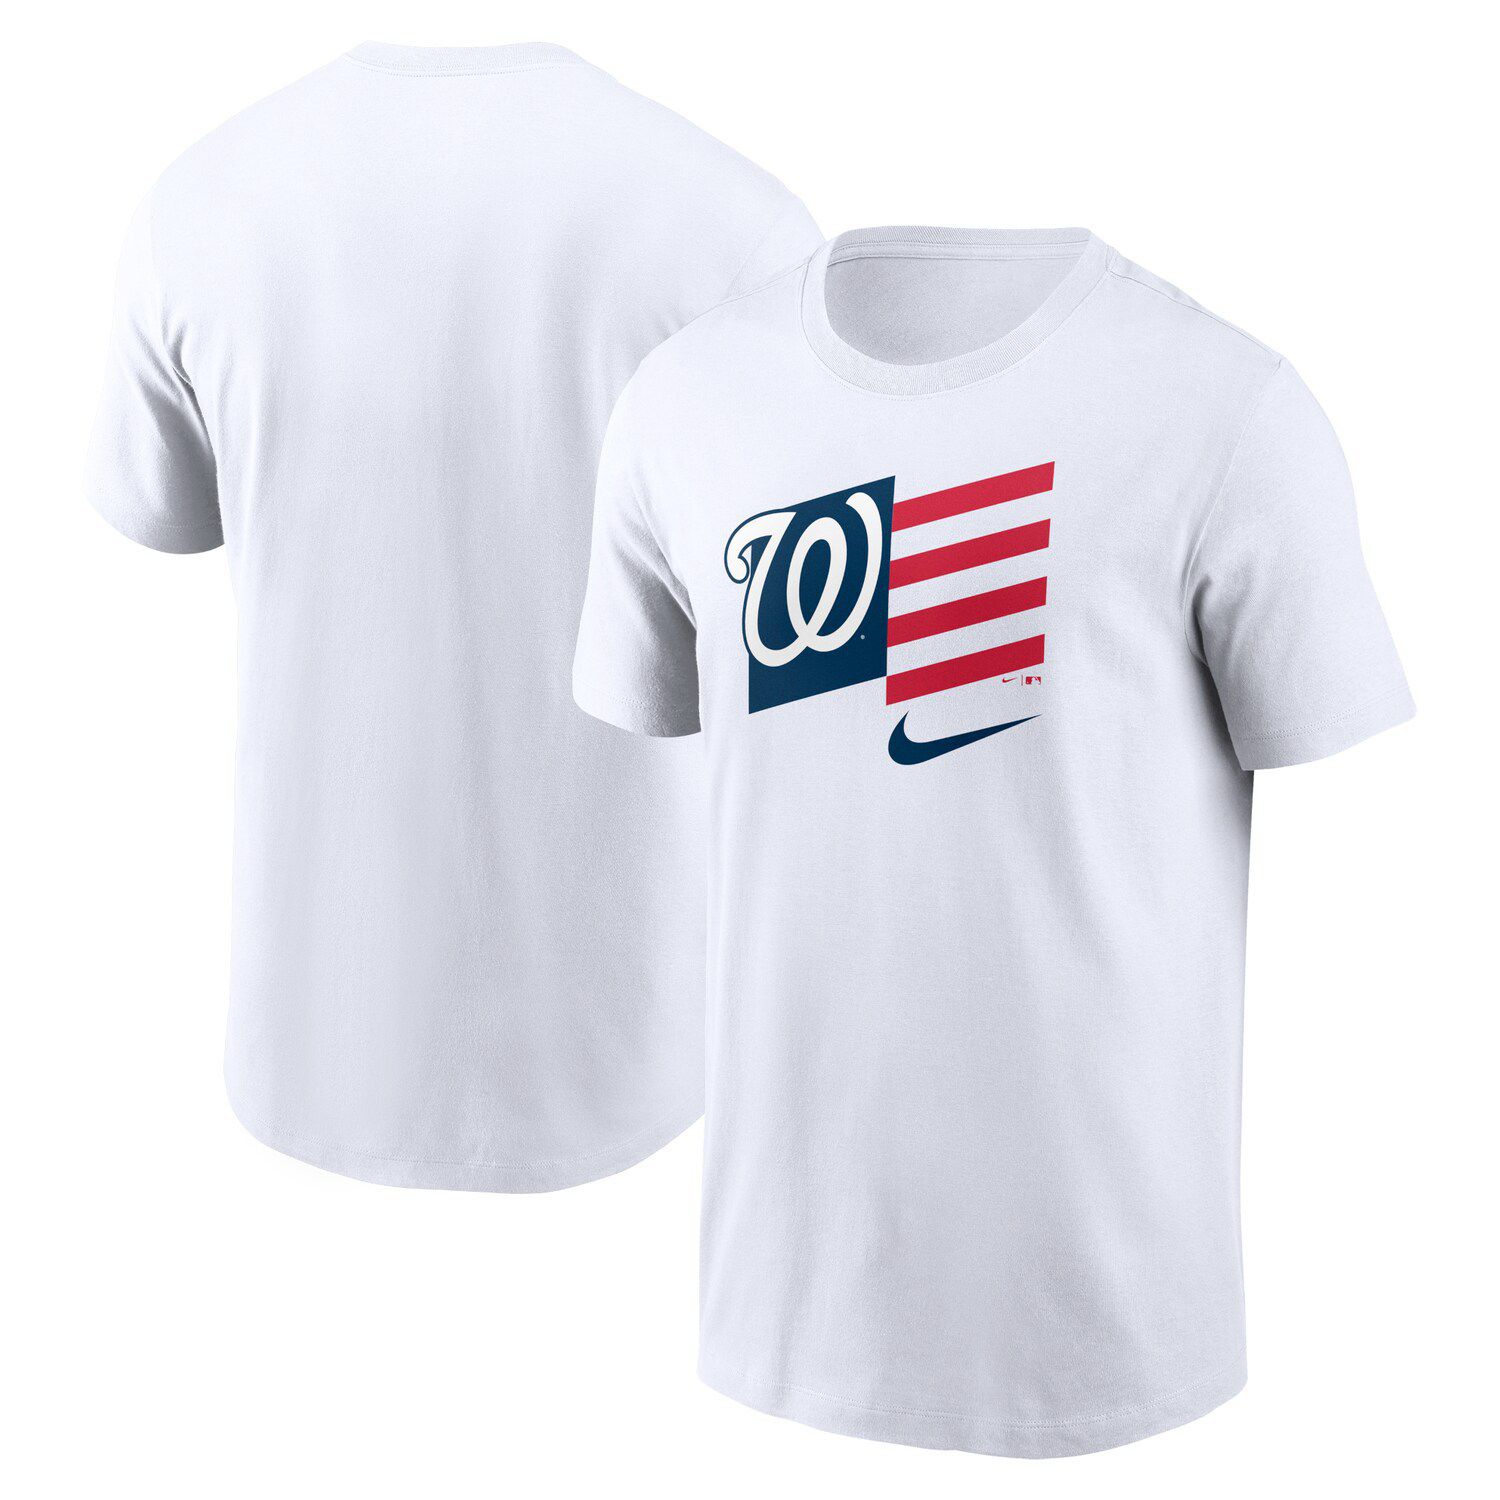 Men's Nike Anthracite Houston Astros Americana T-Shirt Size: Small